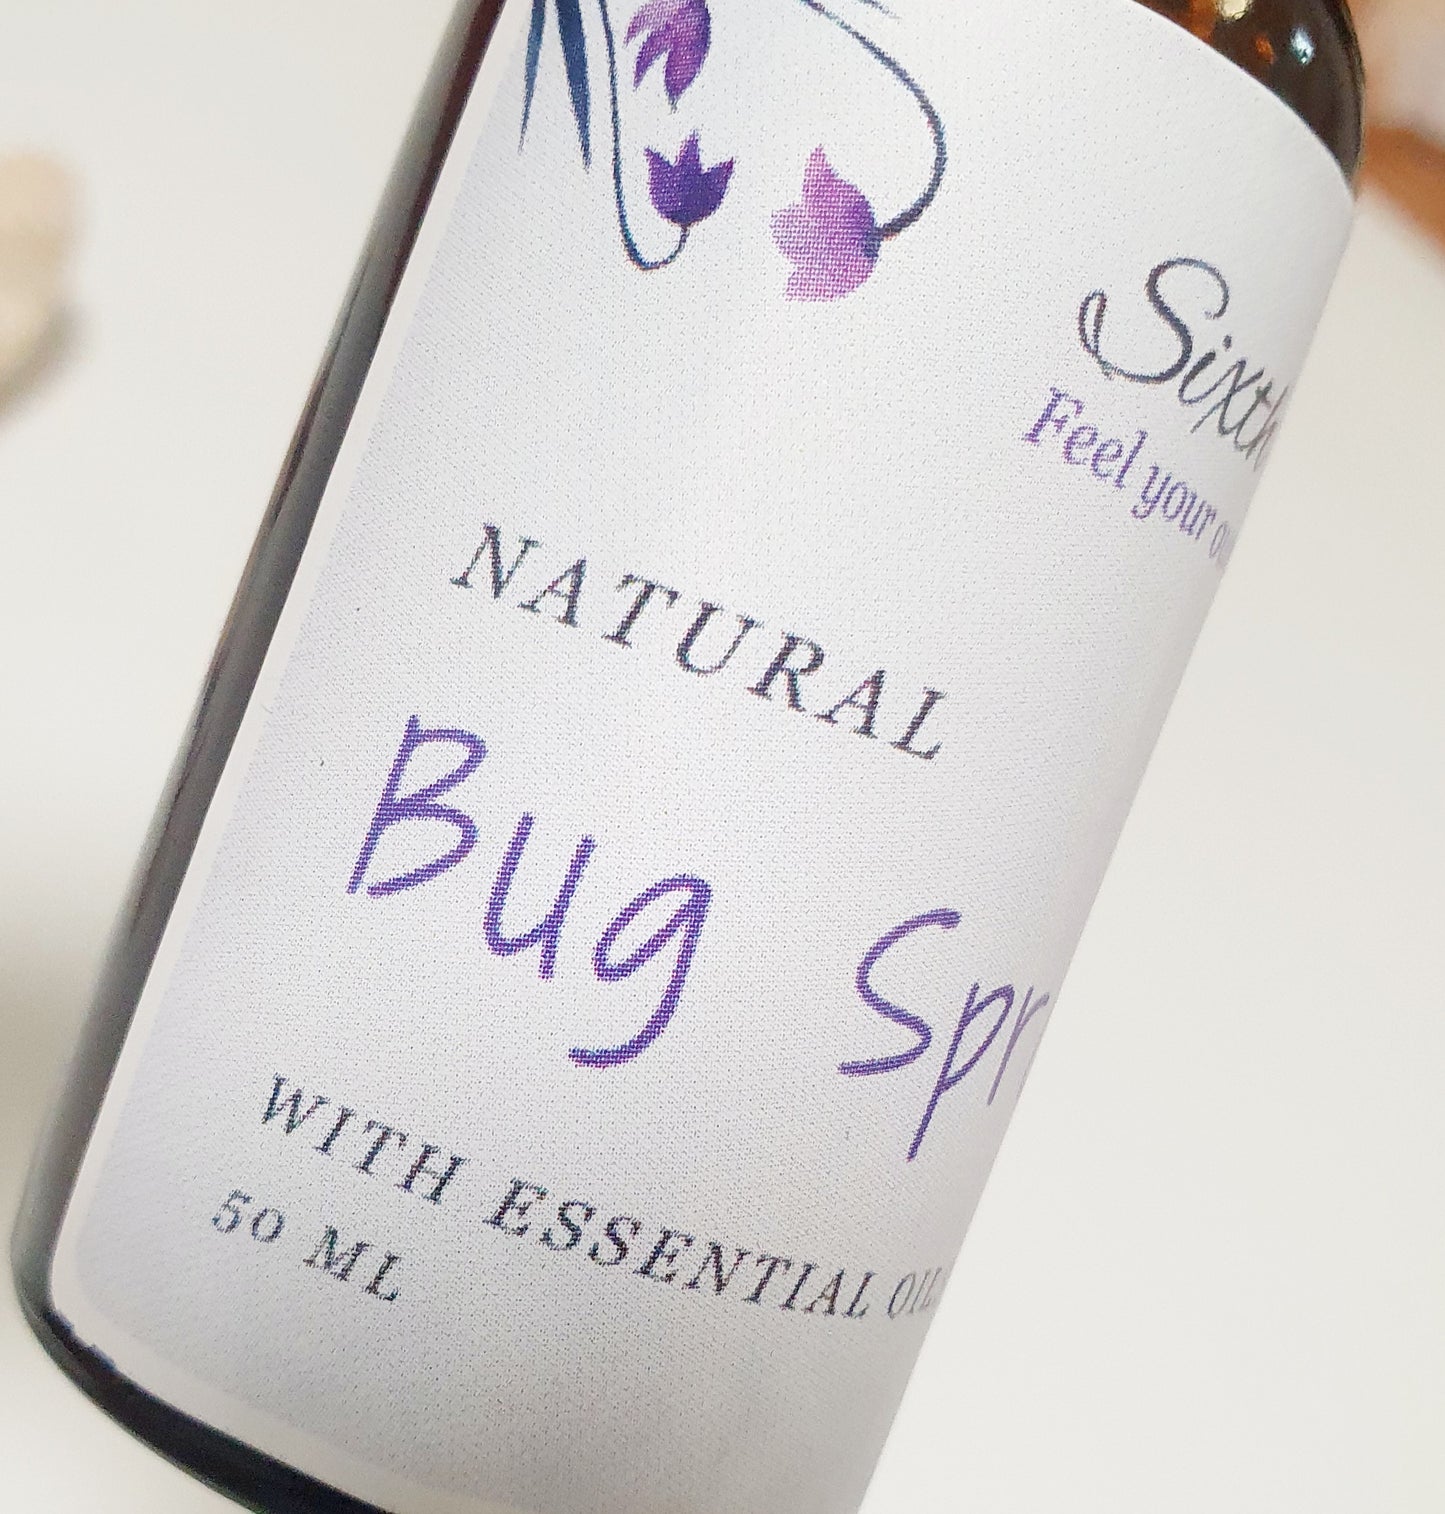 Natural bug spray